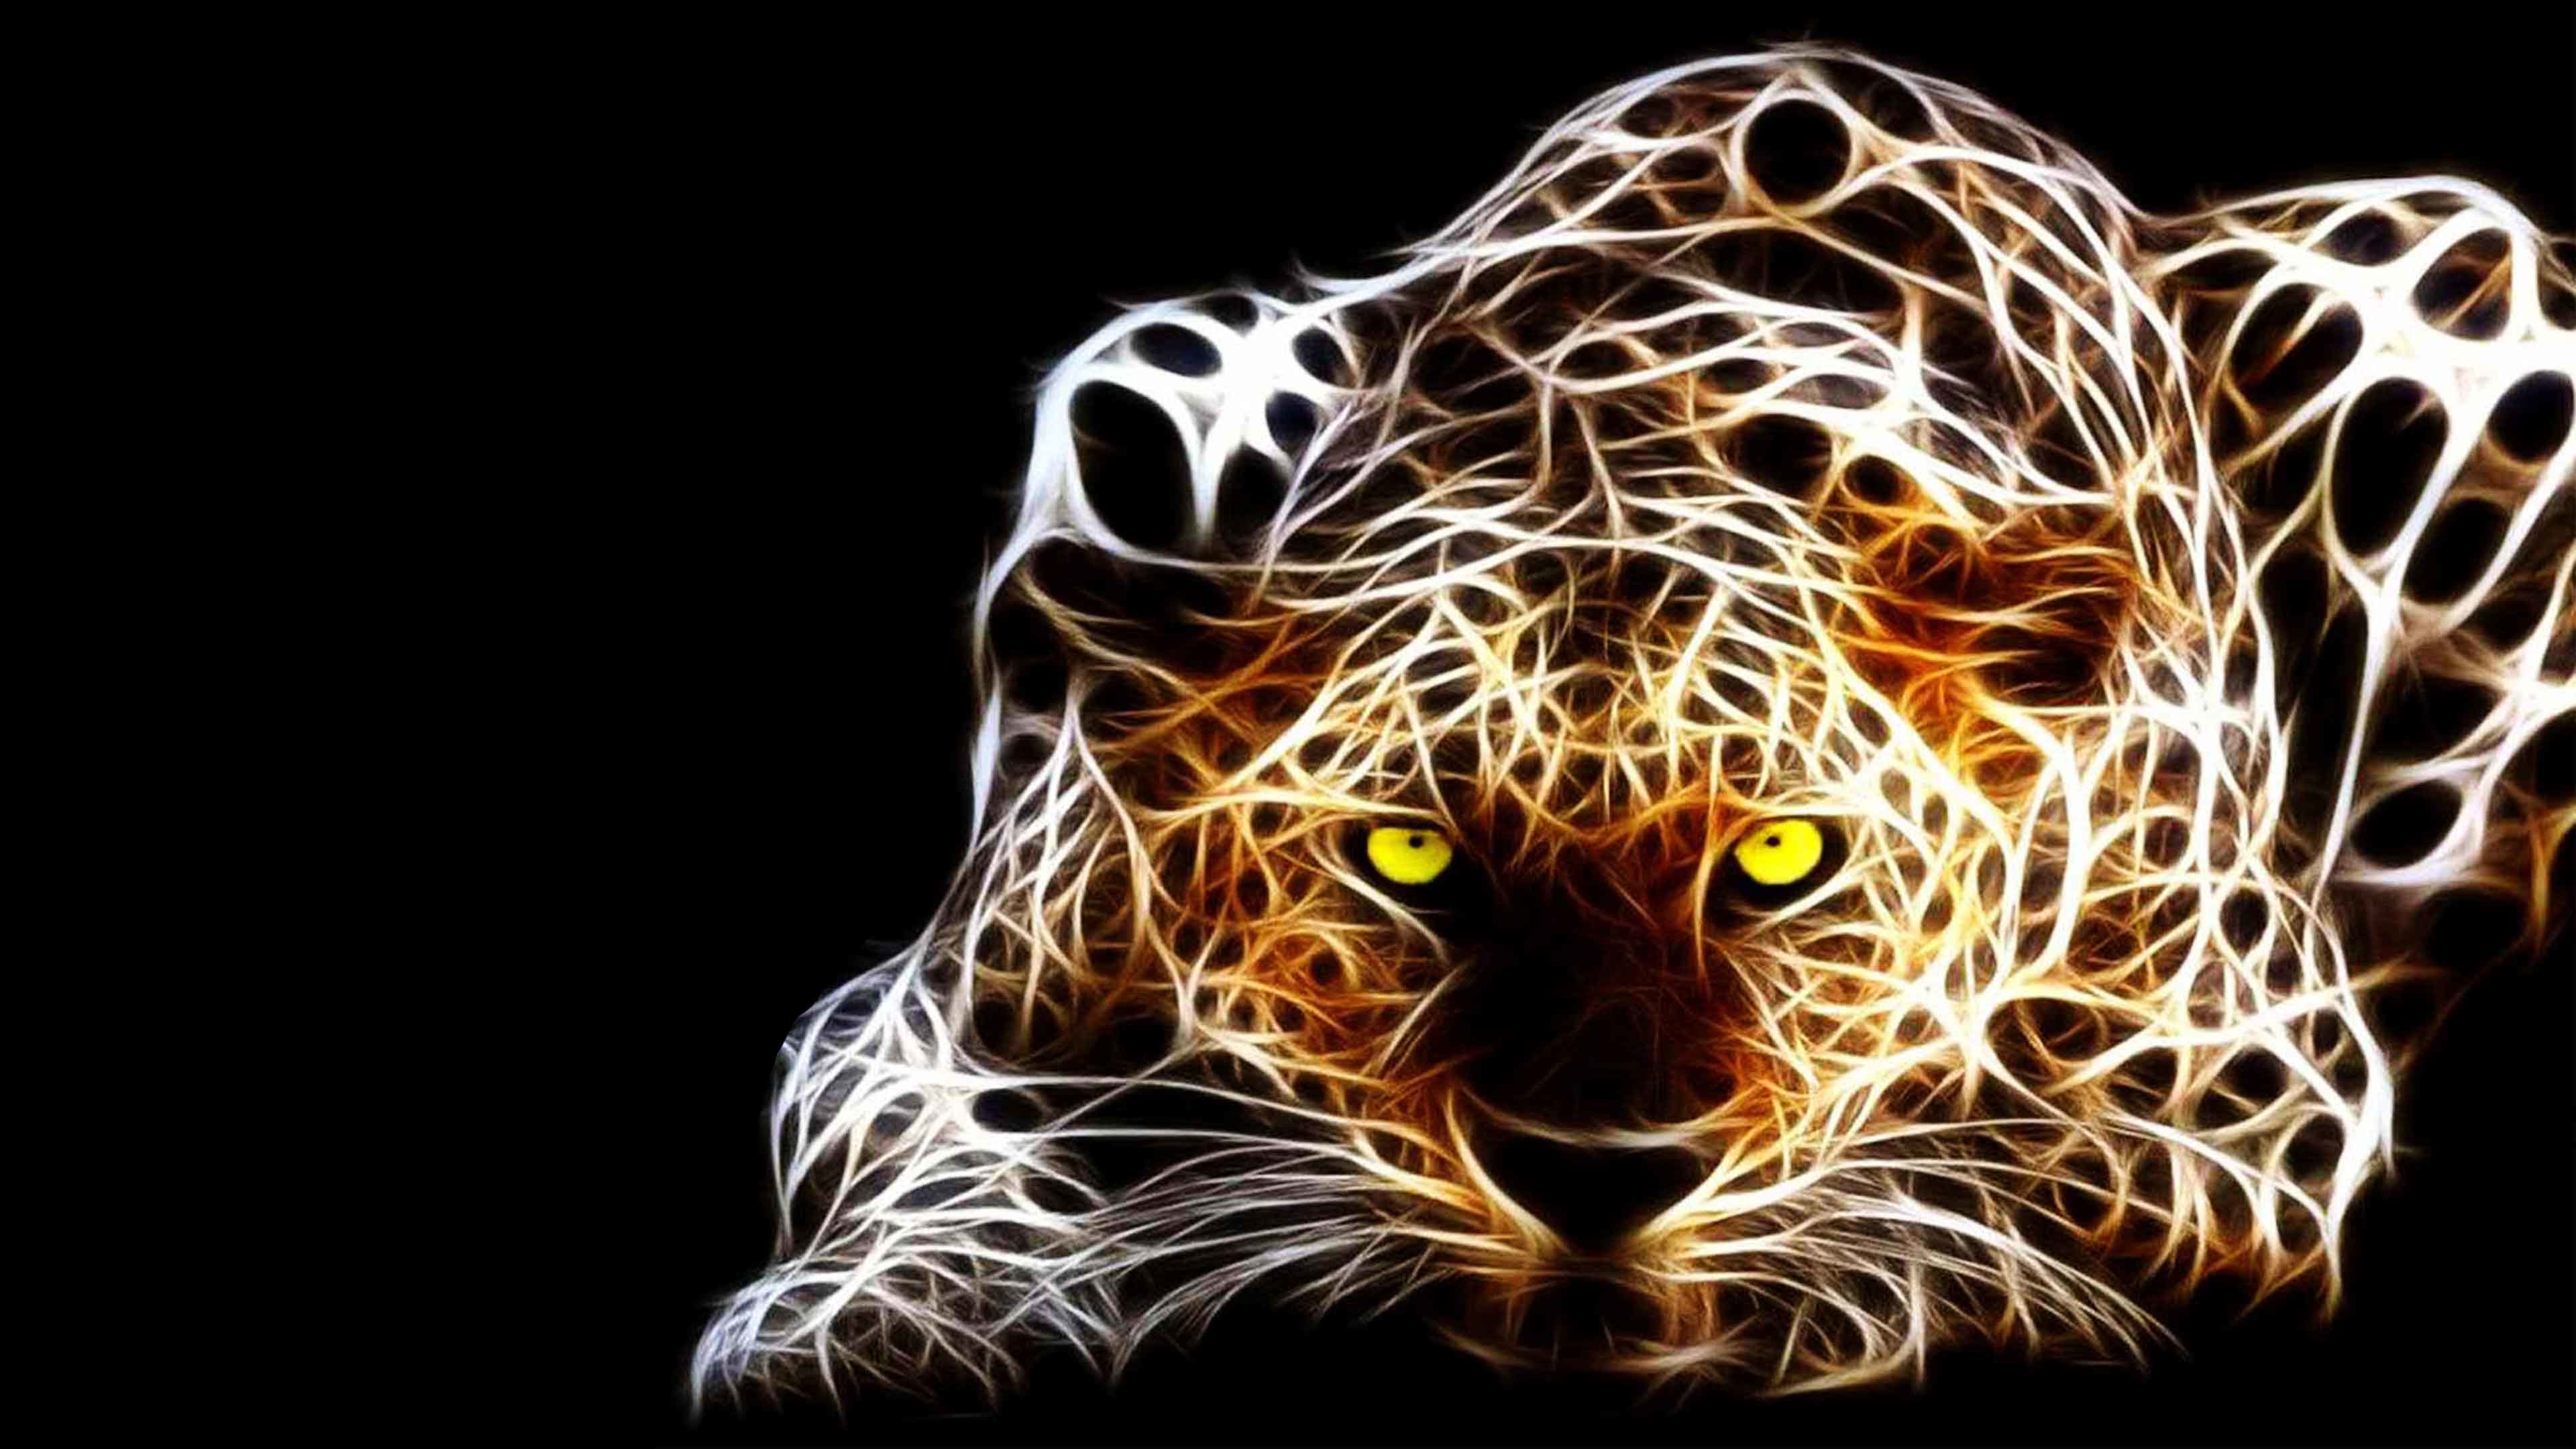 3840x2160, Animated Tiger Wallpapers - Neon Animal Wallpaper Hd - 3840x2160  Wallpaper 